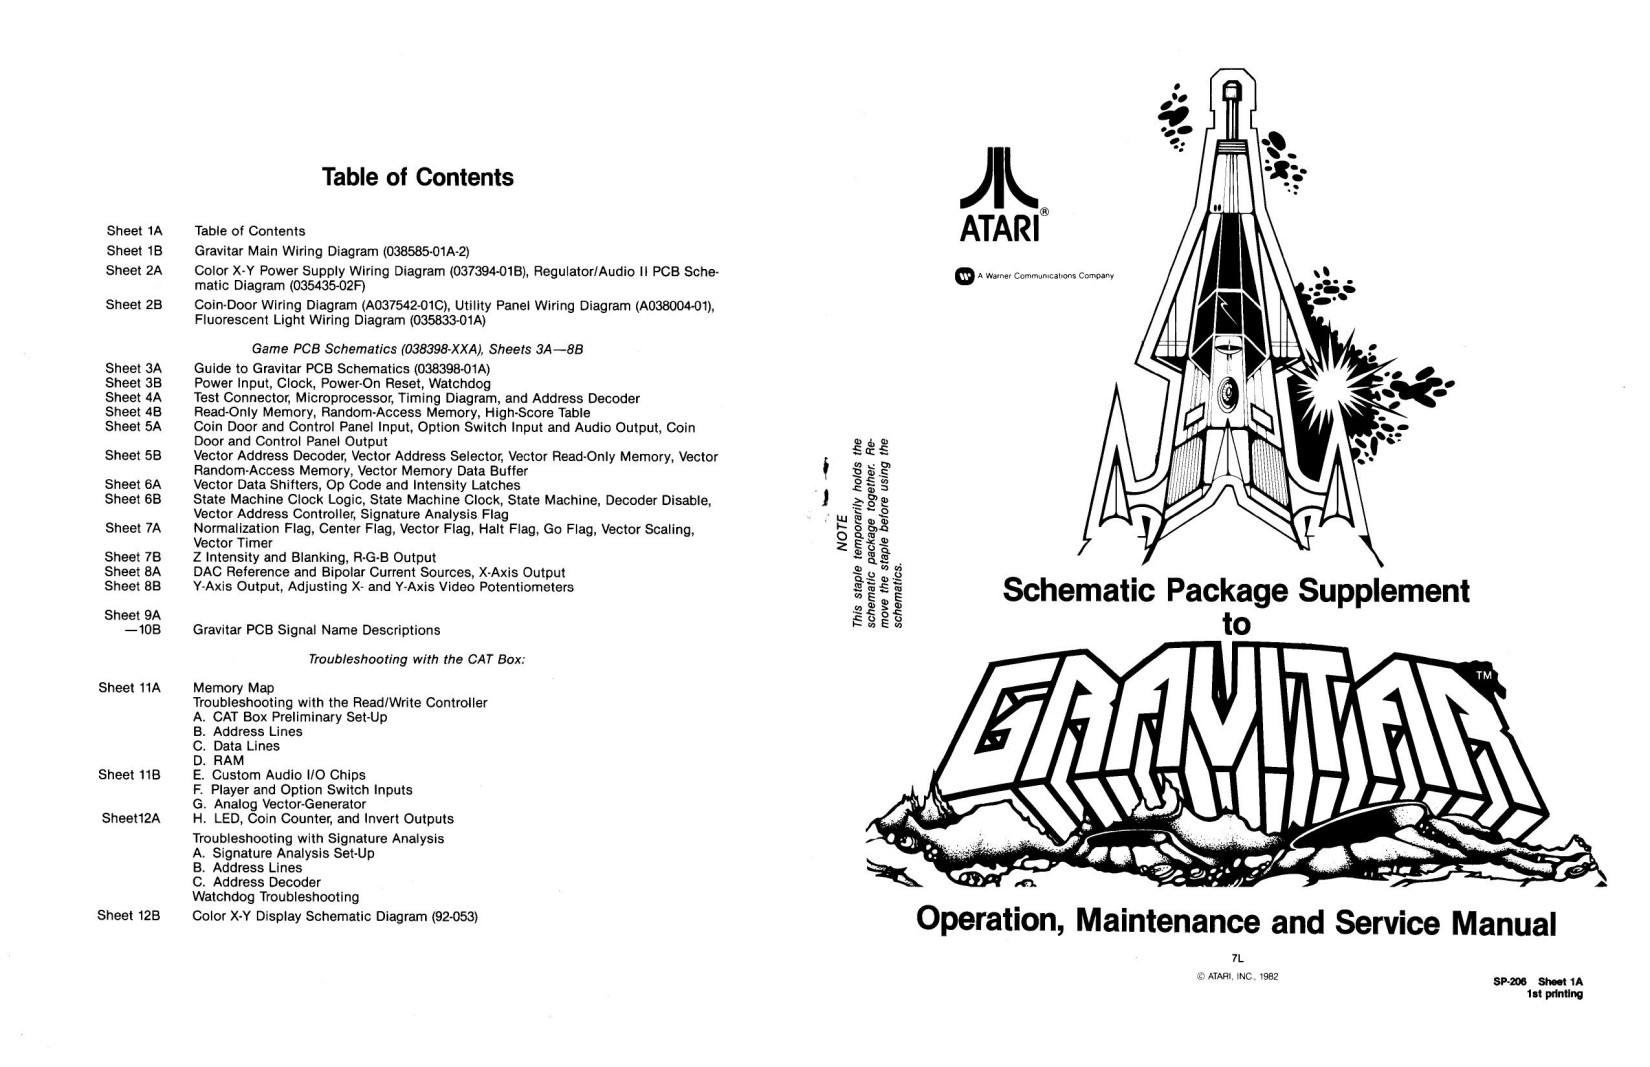 Gravitar (SP-206 1st Printing) (Schematic Package) (U)